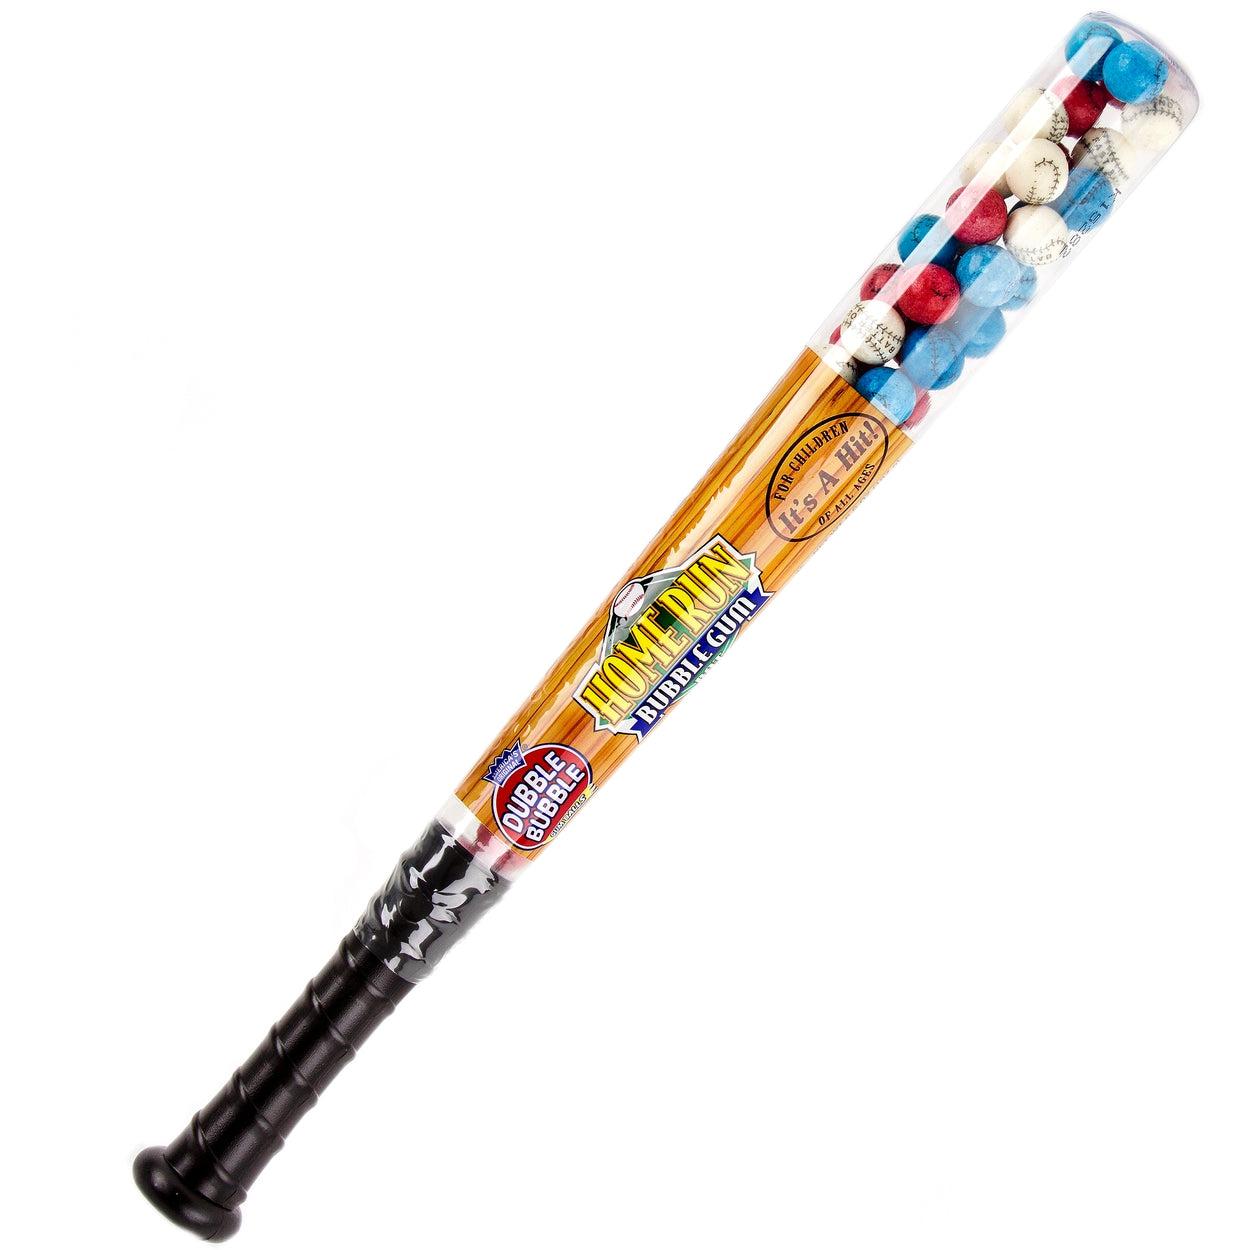 Charms-Dubble Bubble Homerun Baseball Bat With Gumballs 6.6 oz.-91766-Single-Legacy Toys